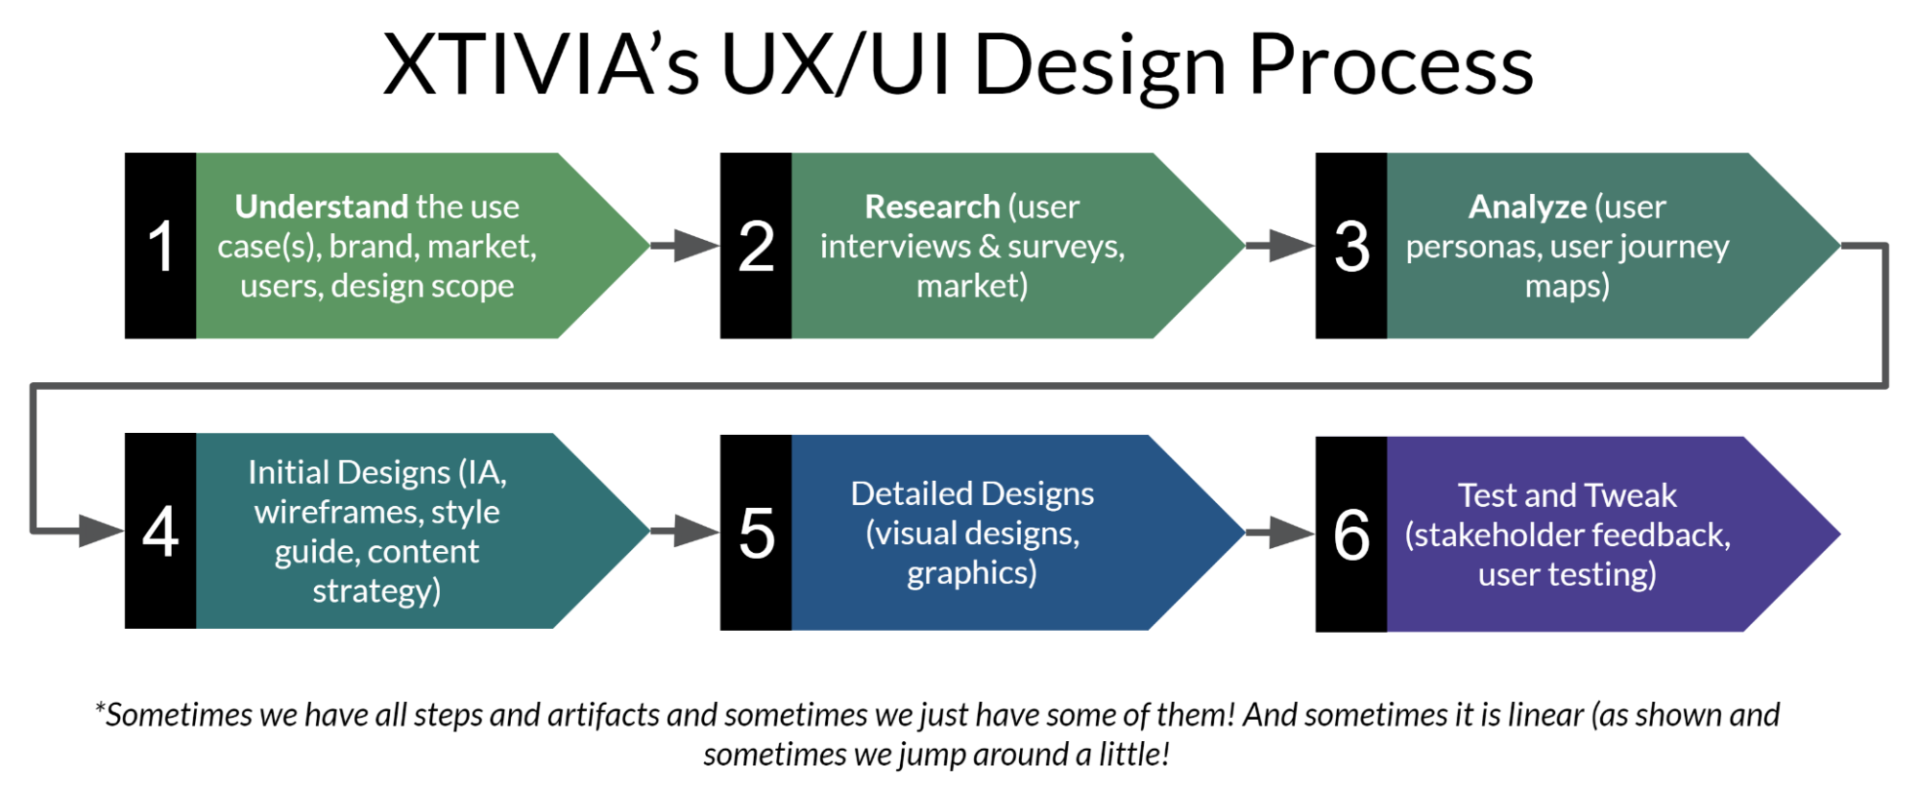 XTIVIA UX UI Design Process Overview